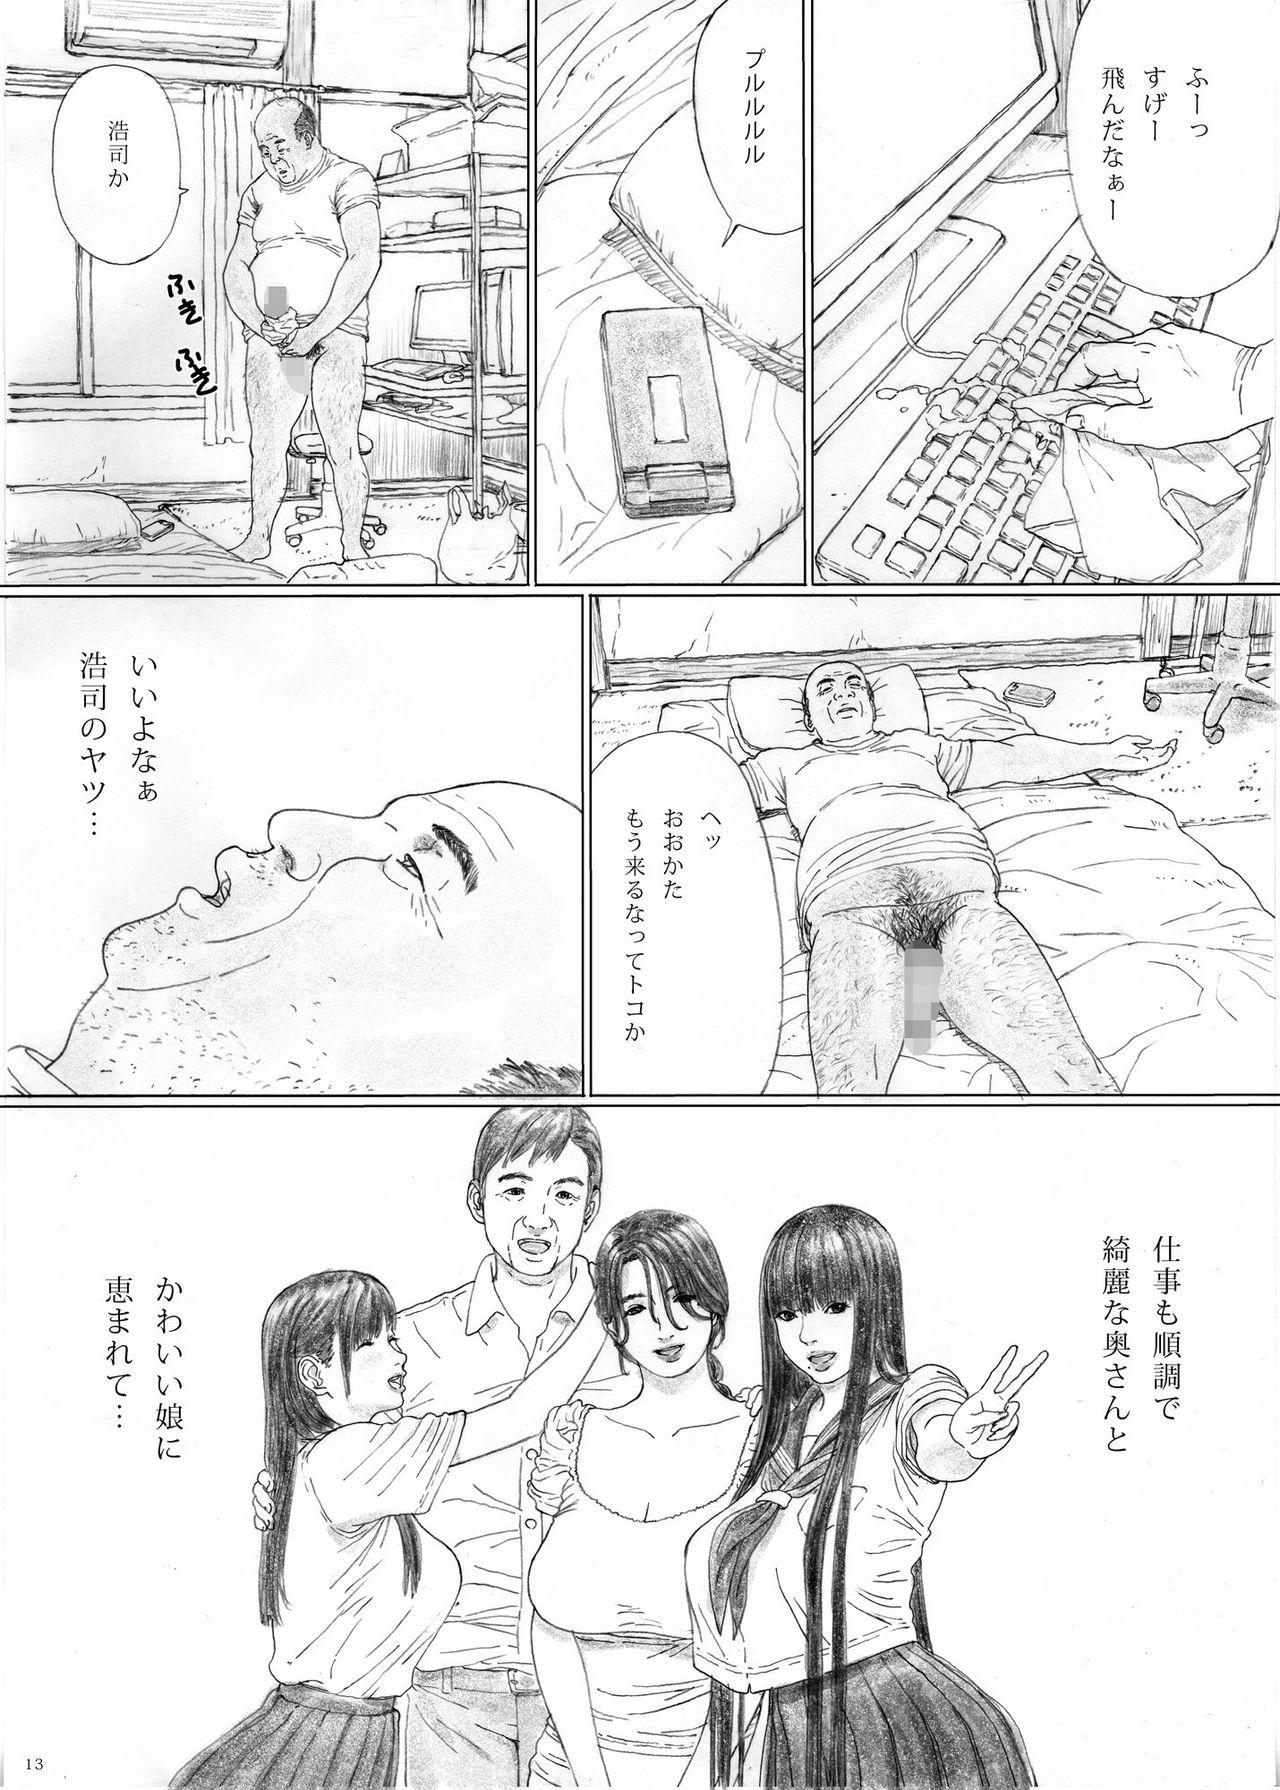 Tinder Inyoku no Sumika 1 - Original Strip - Page 12